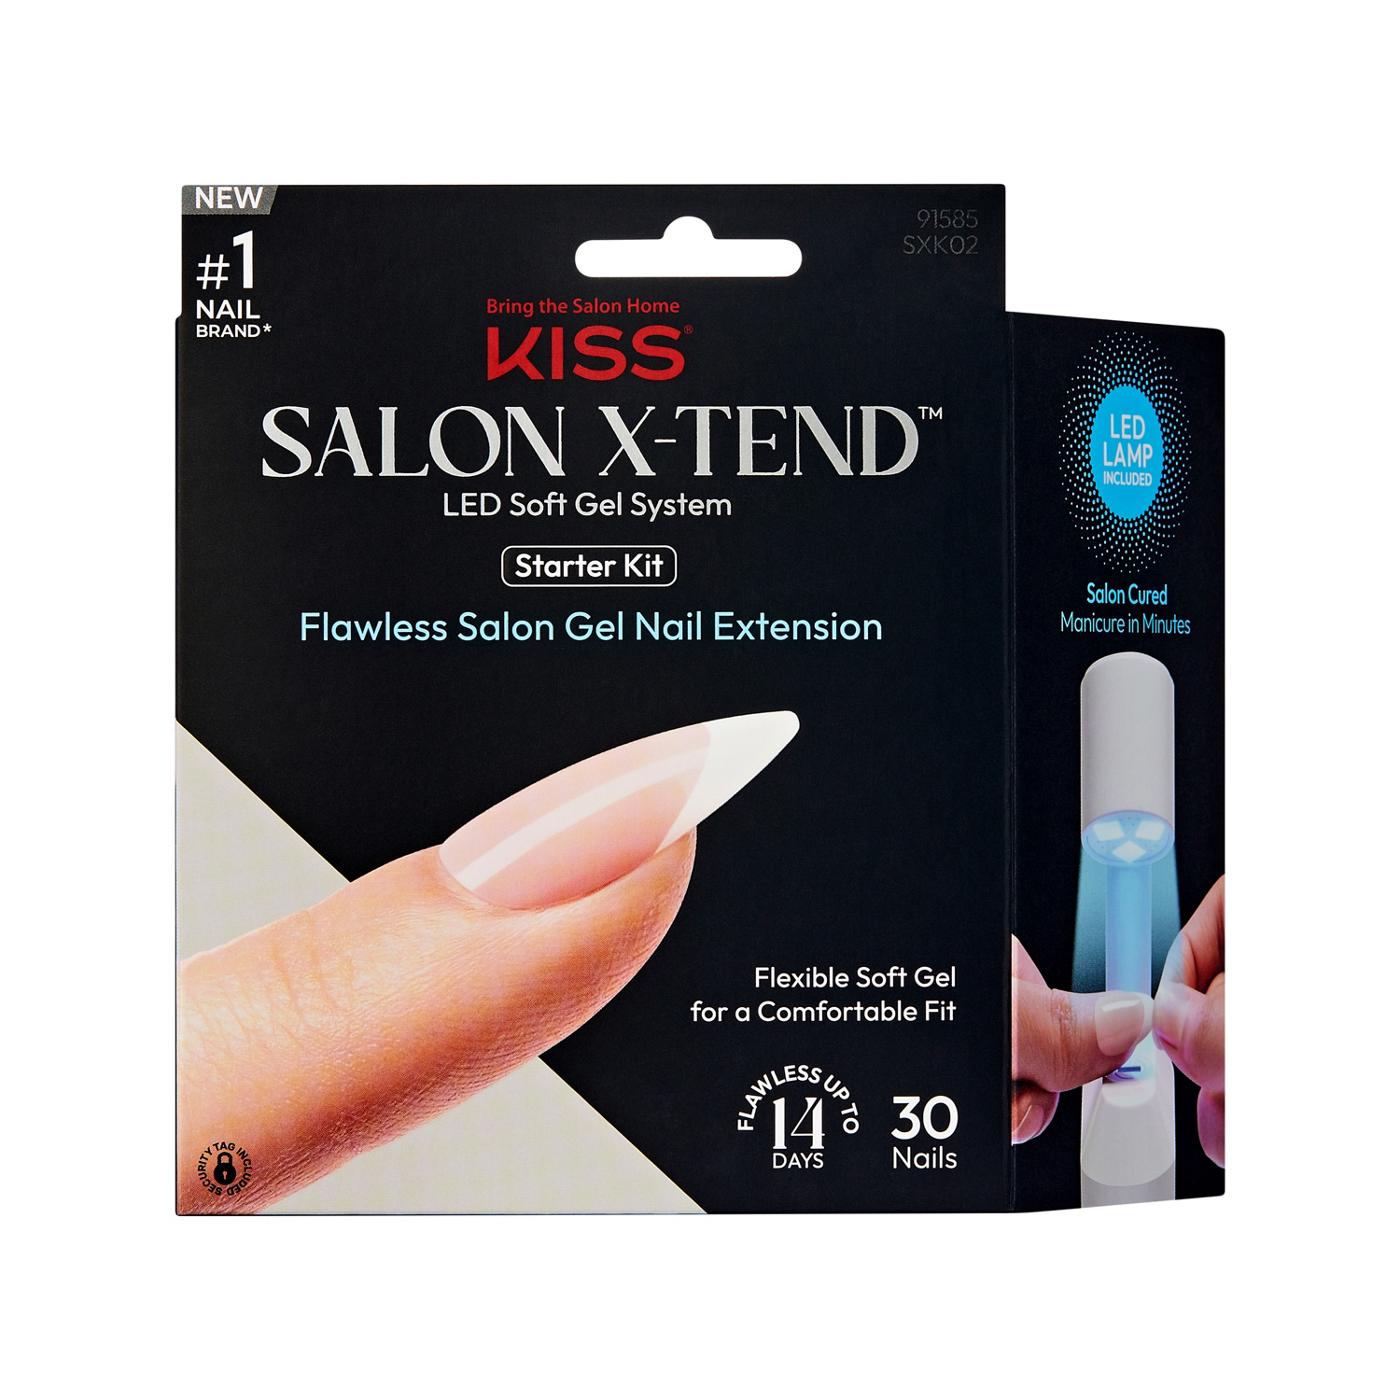 KISS Salon X-Tend LED Soft Gel System Starter Kit - Pure; image 1 of 7